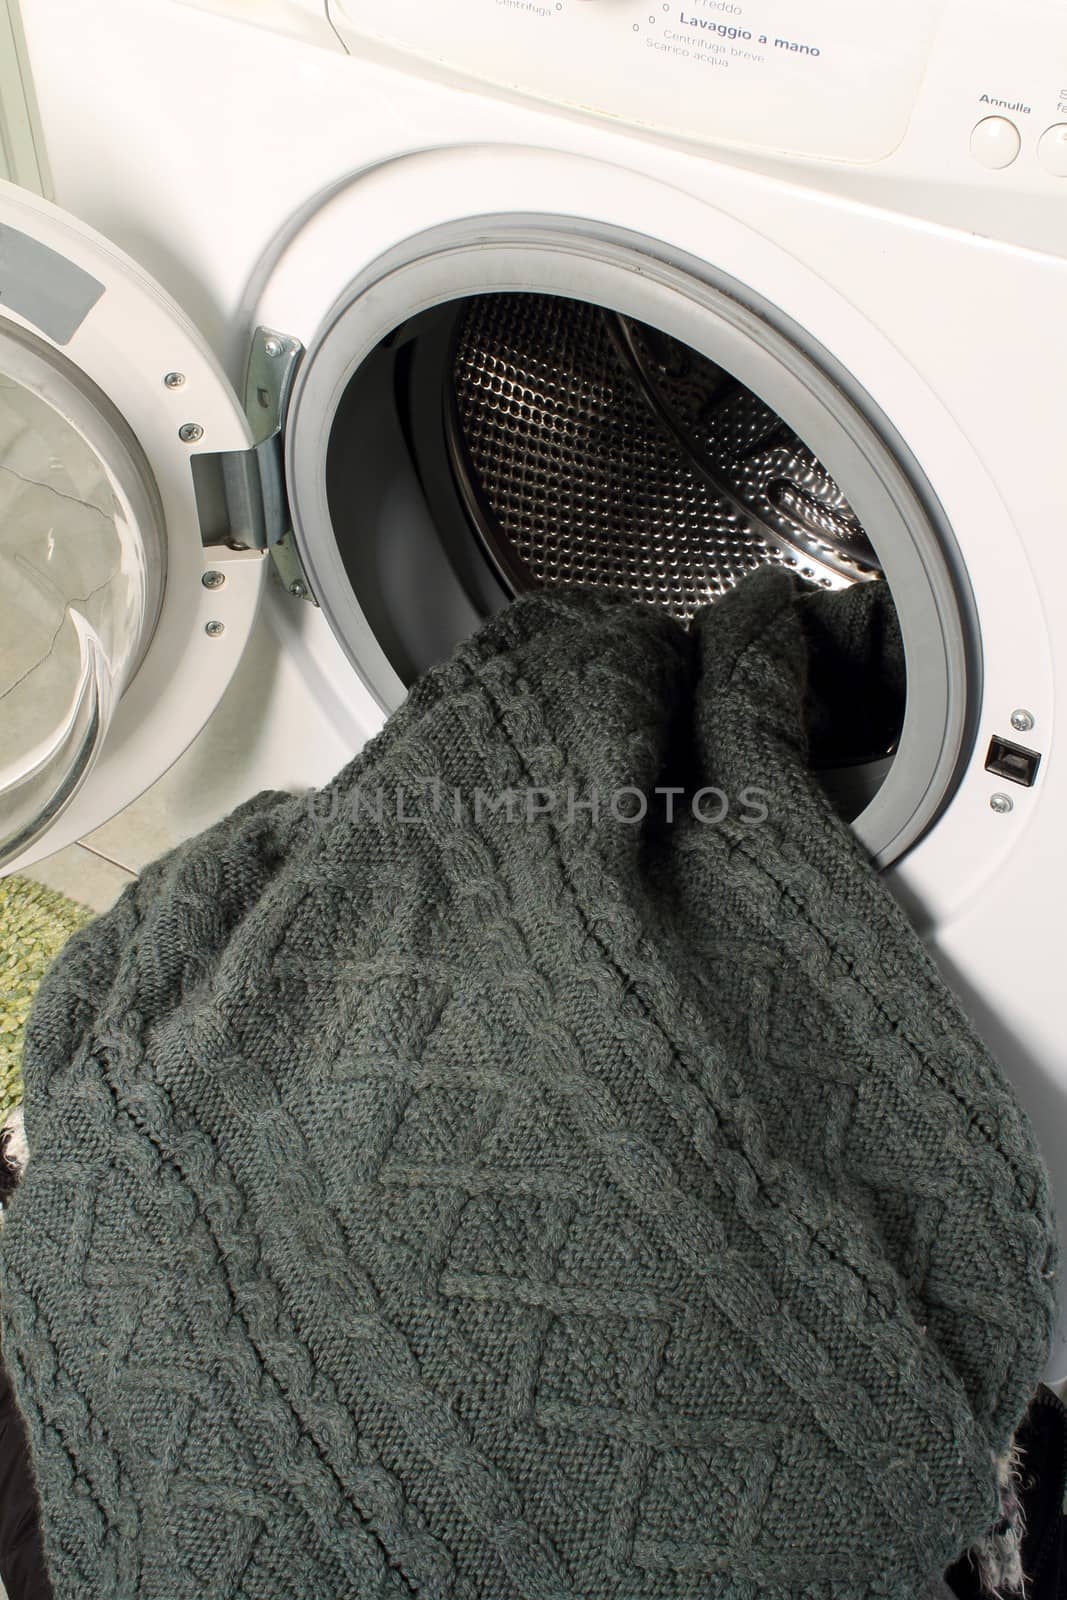 Sweater in washing machine